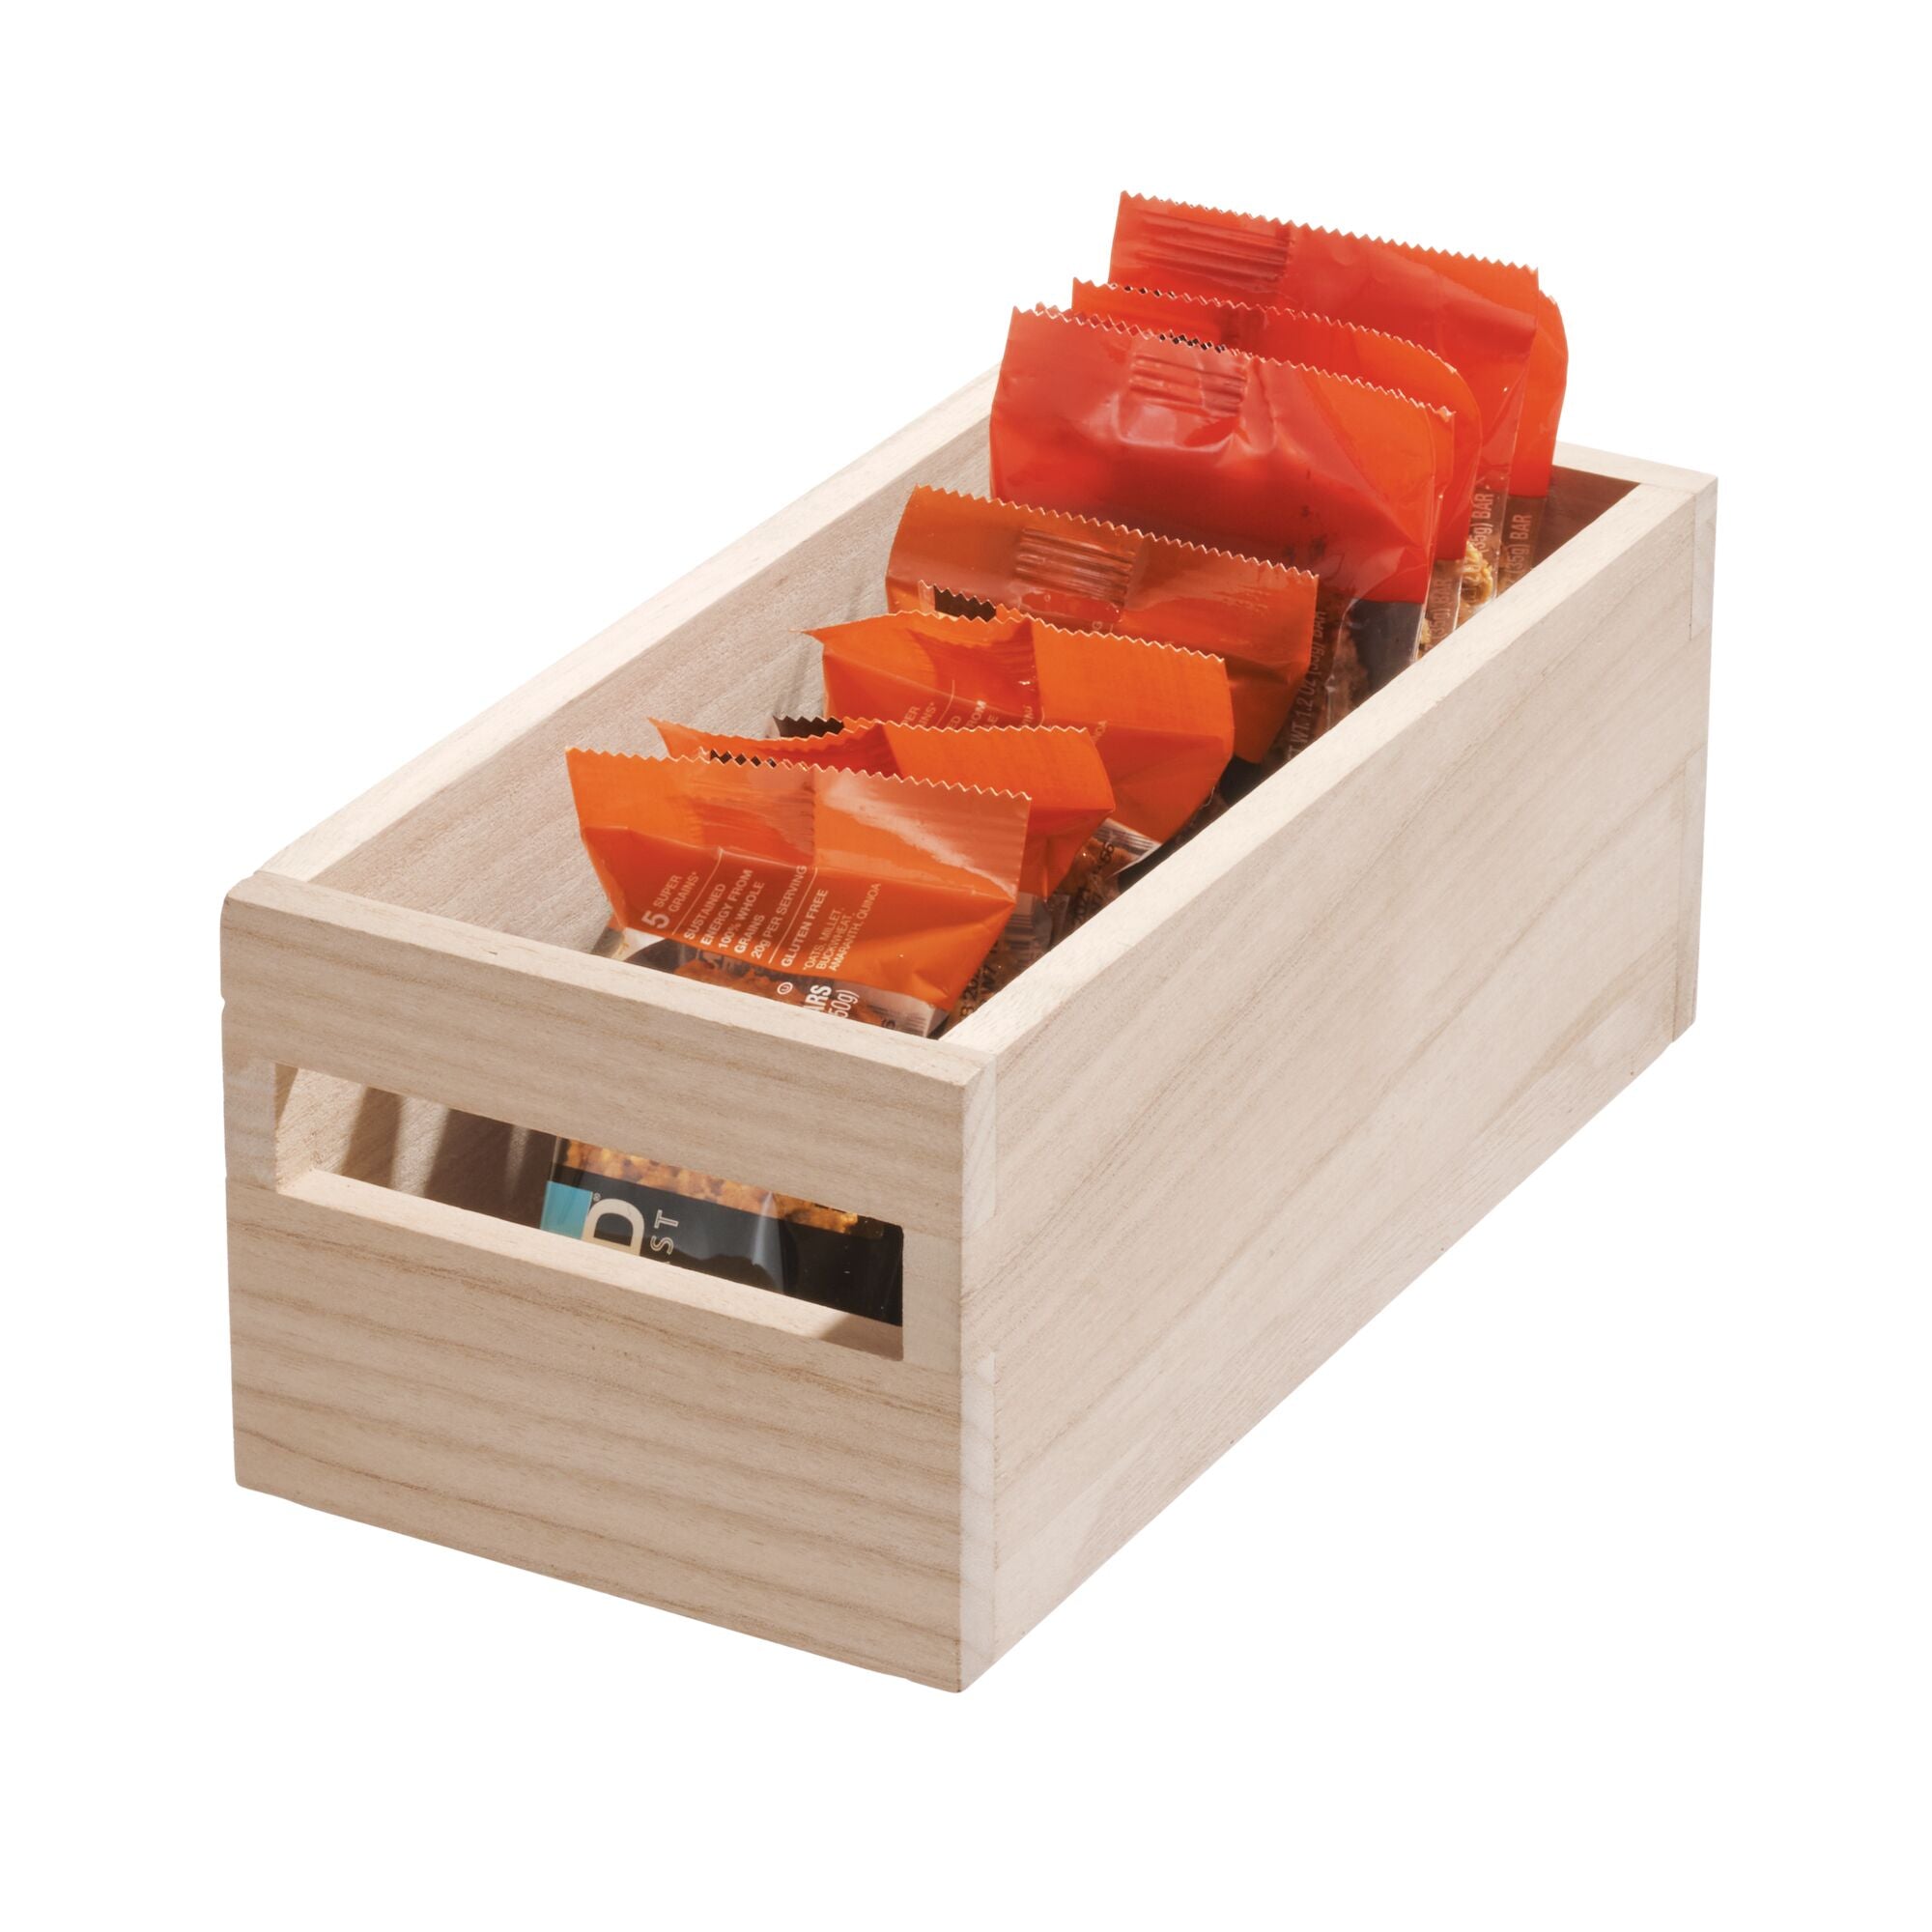 iDesign Natural Paulownia Wood Storage Bin with Handles, 10 inch L x 7.5 inch W x 6 inch H